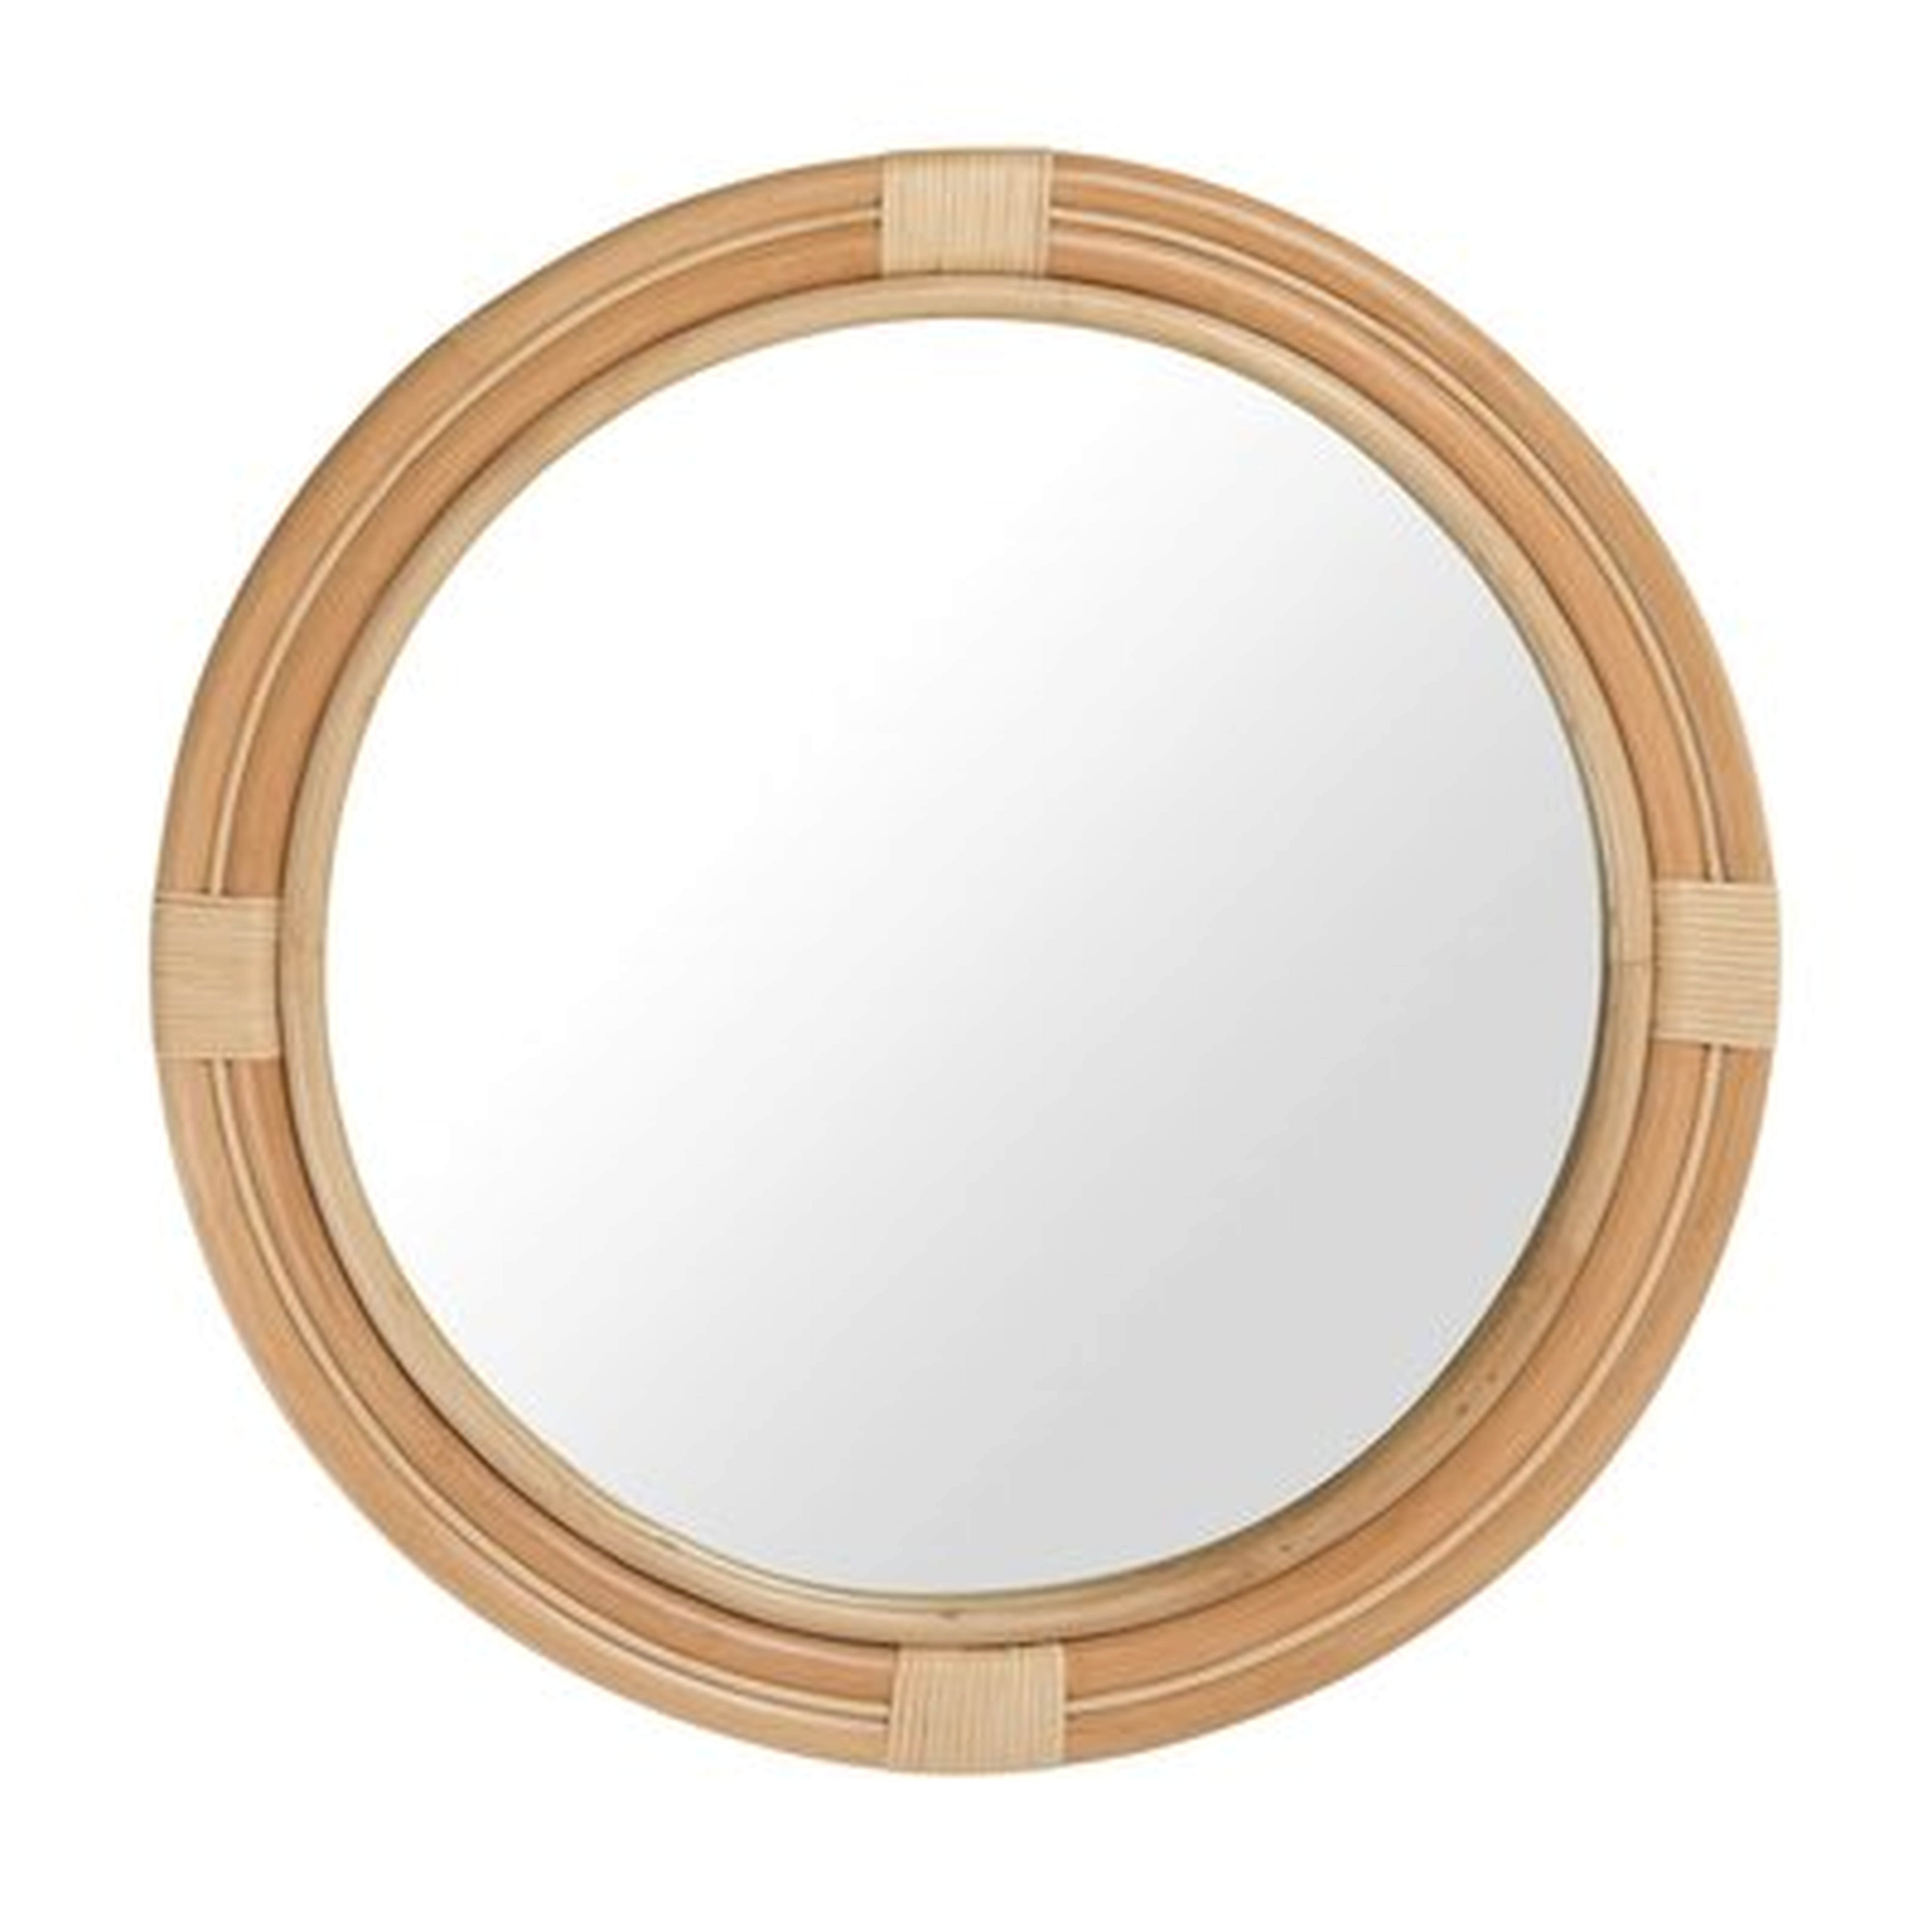 Round Nautical Decorative Accent Mirror - Natural - Wayfair